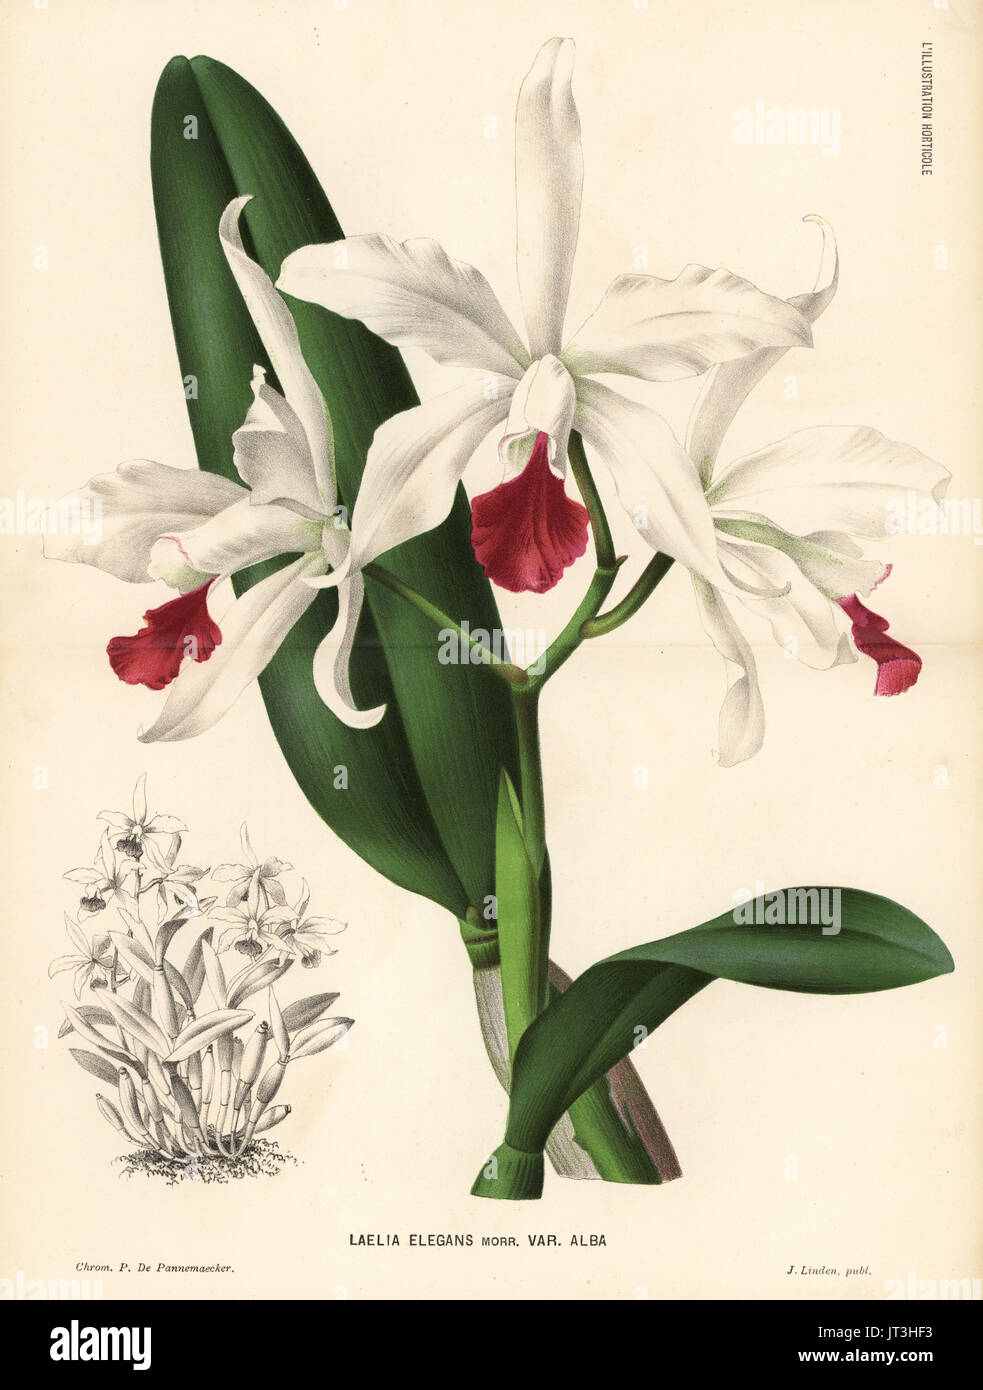 White Cattleya × elegans hybrid orchid (Laelia elegans var. alba). Chromolithograph by P. de Pannemaeker from Jean Linden's l'Illustration Horticole, Brussels, 1884. Stock Photo